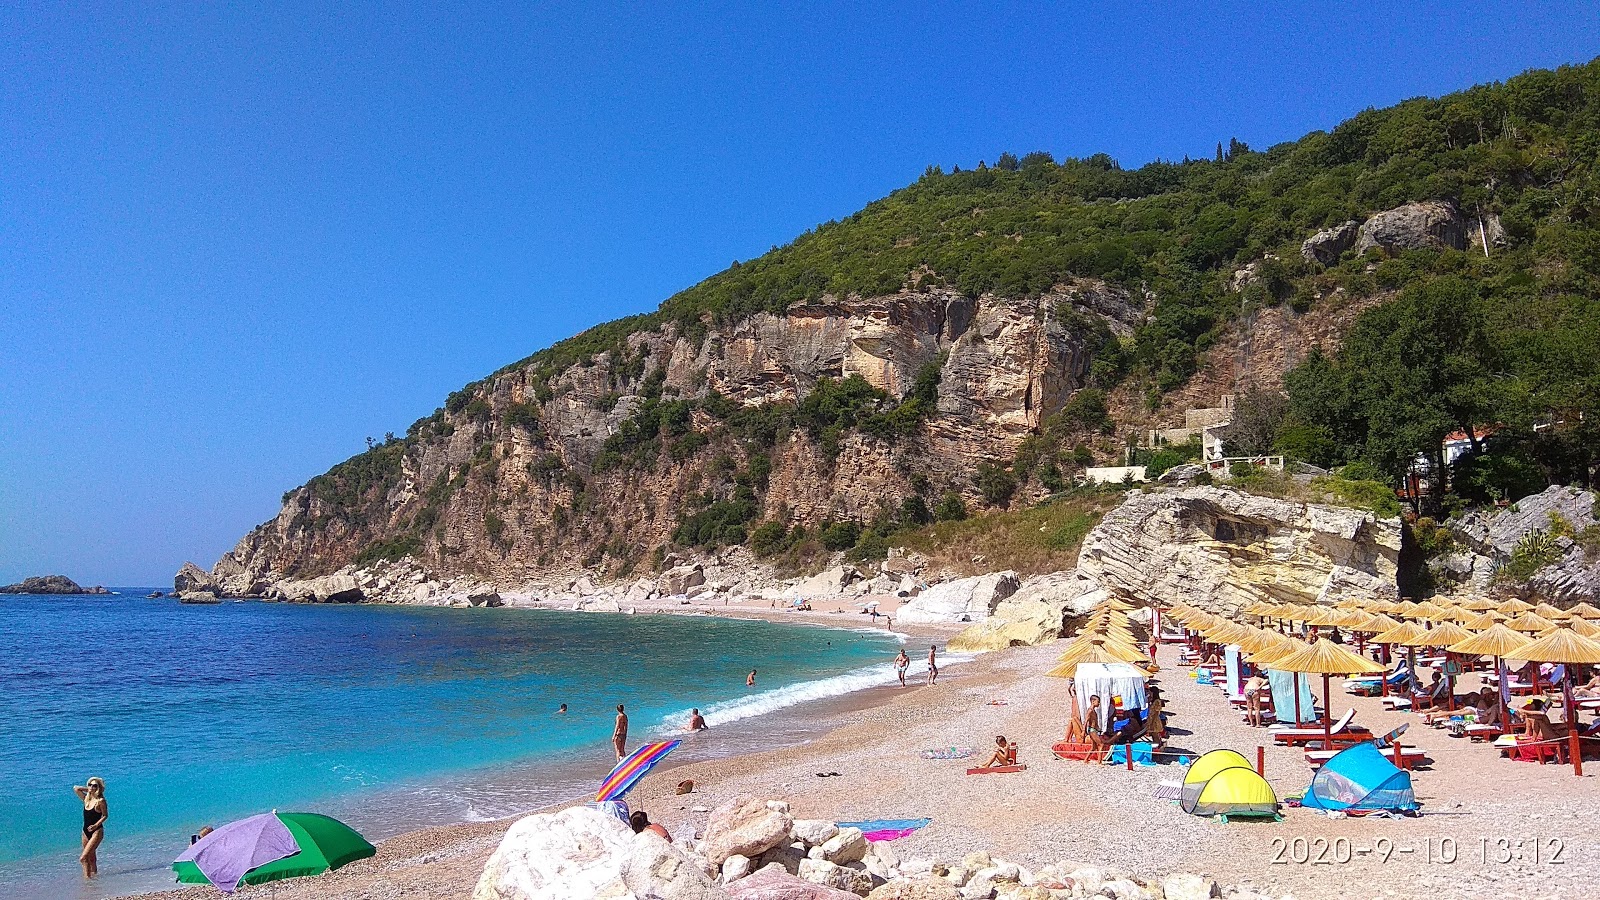 Fotografie cu Perazica Do beach și așezarea